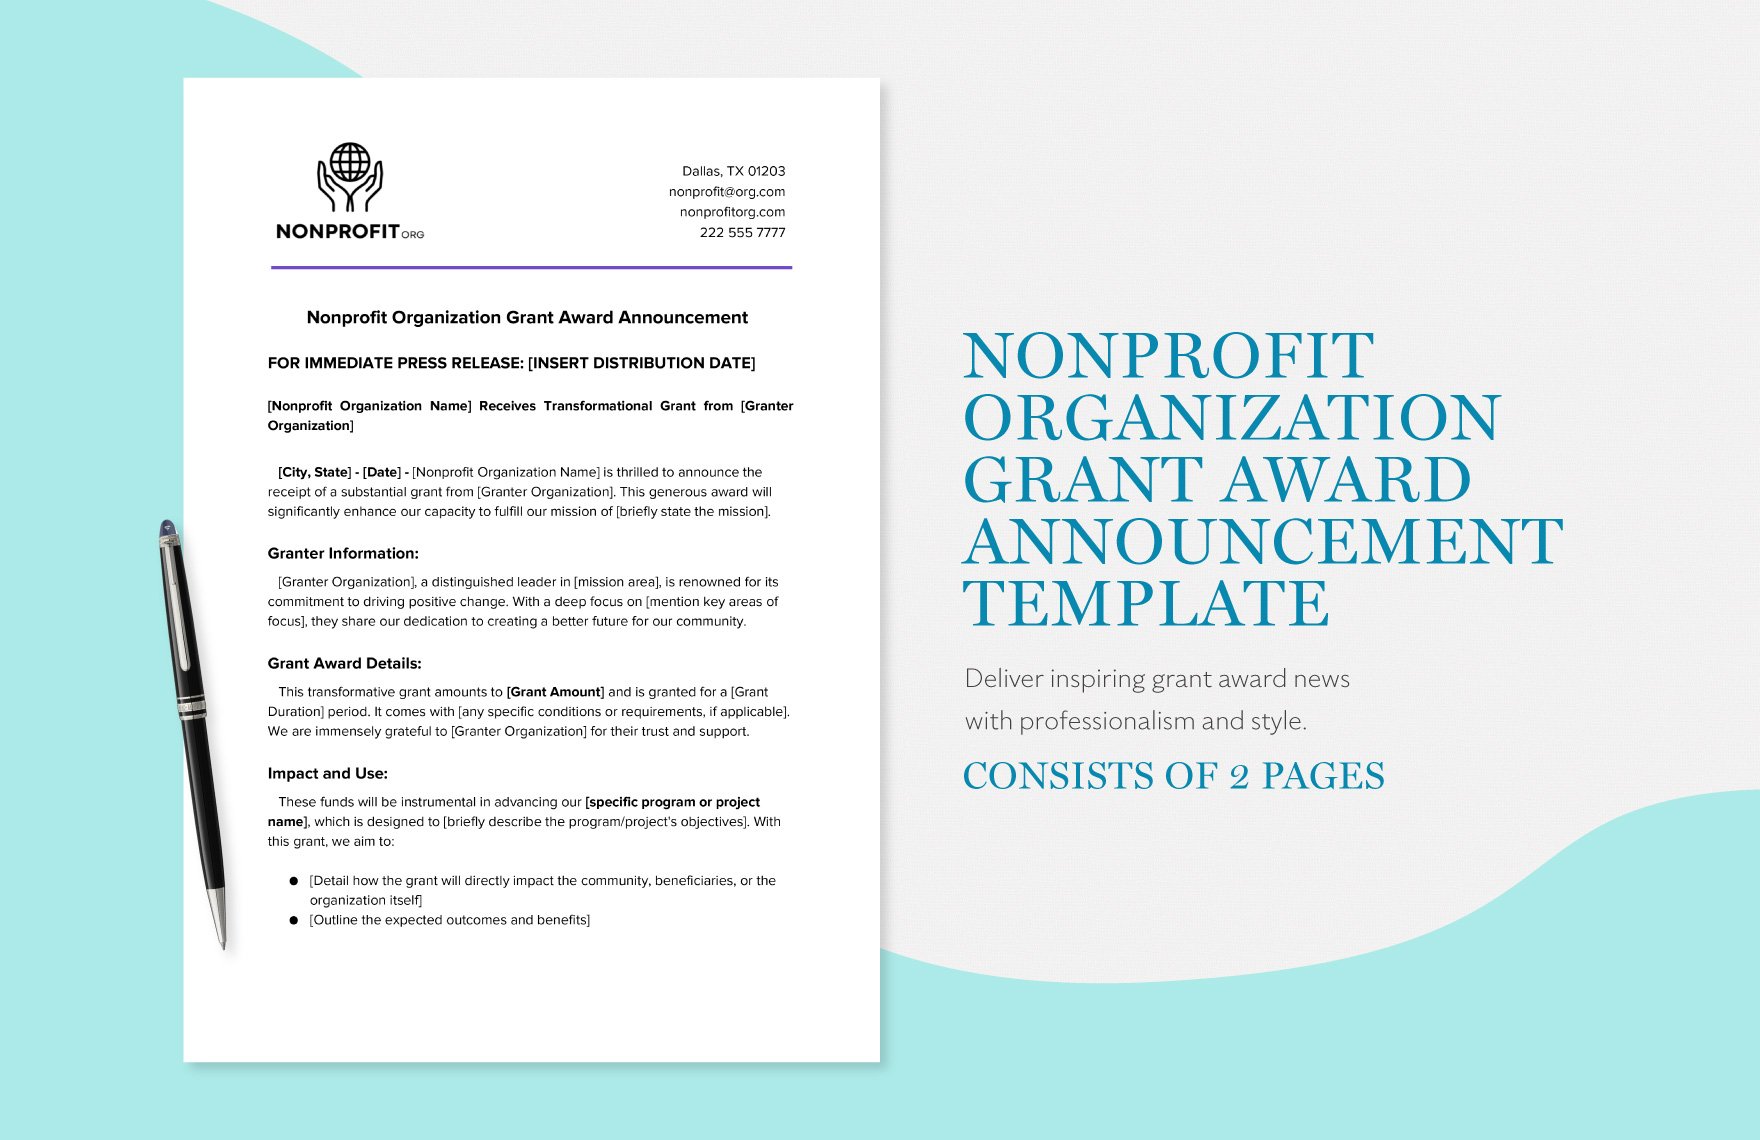 Nonprofit Organization Grant Award Announcement Template in Word, Google Docs, PDF